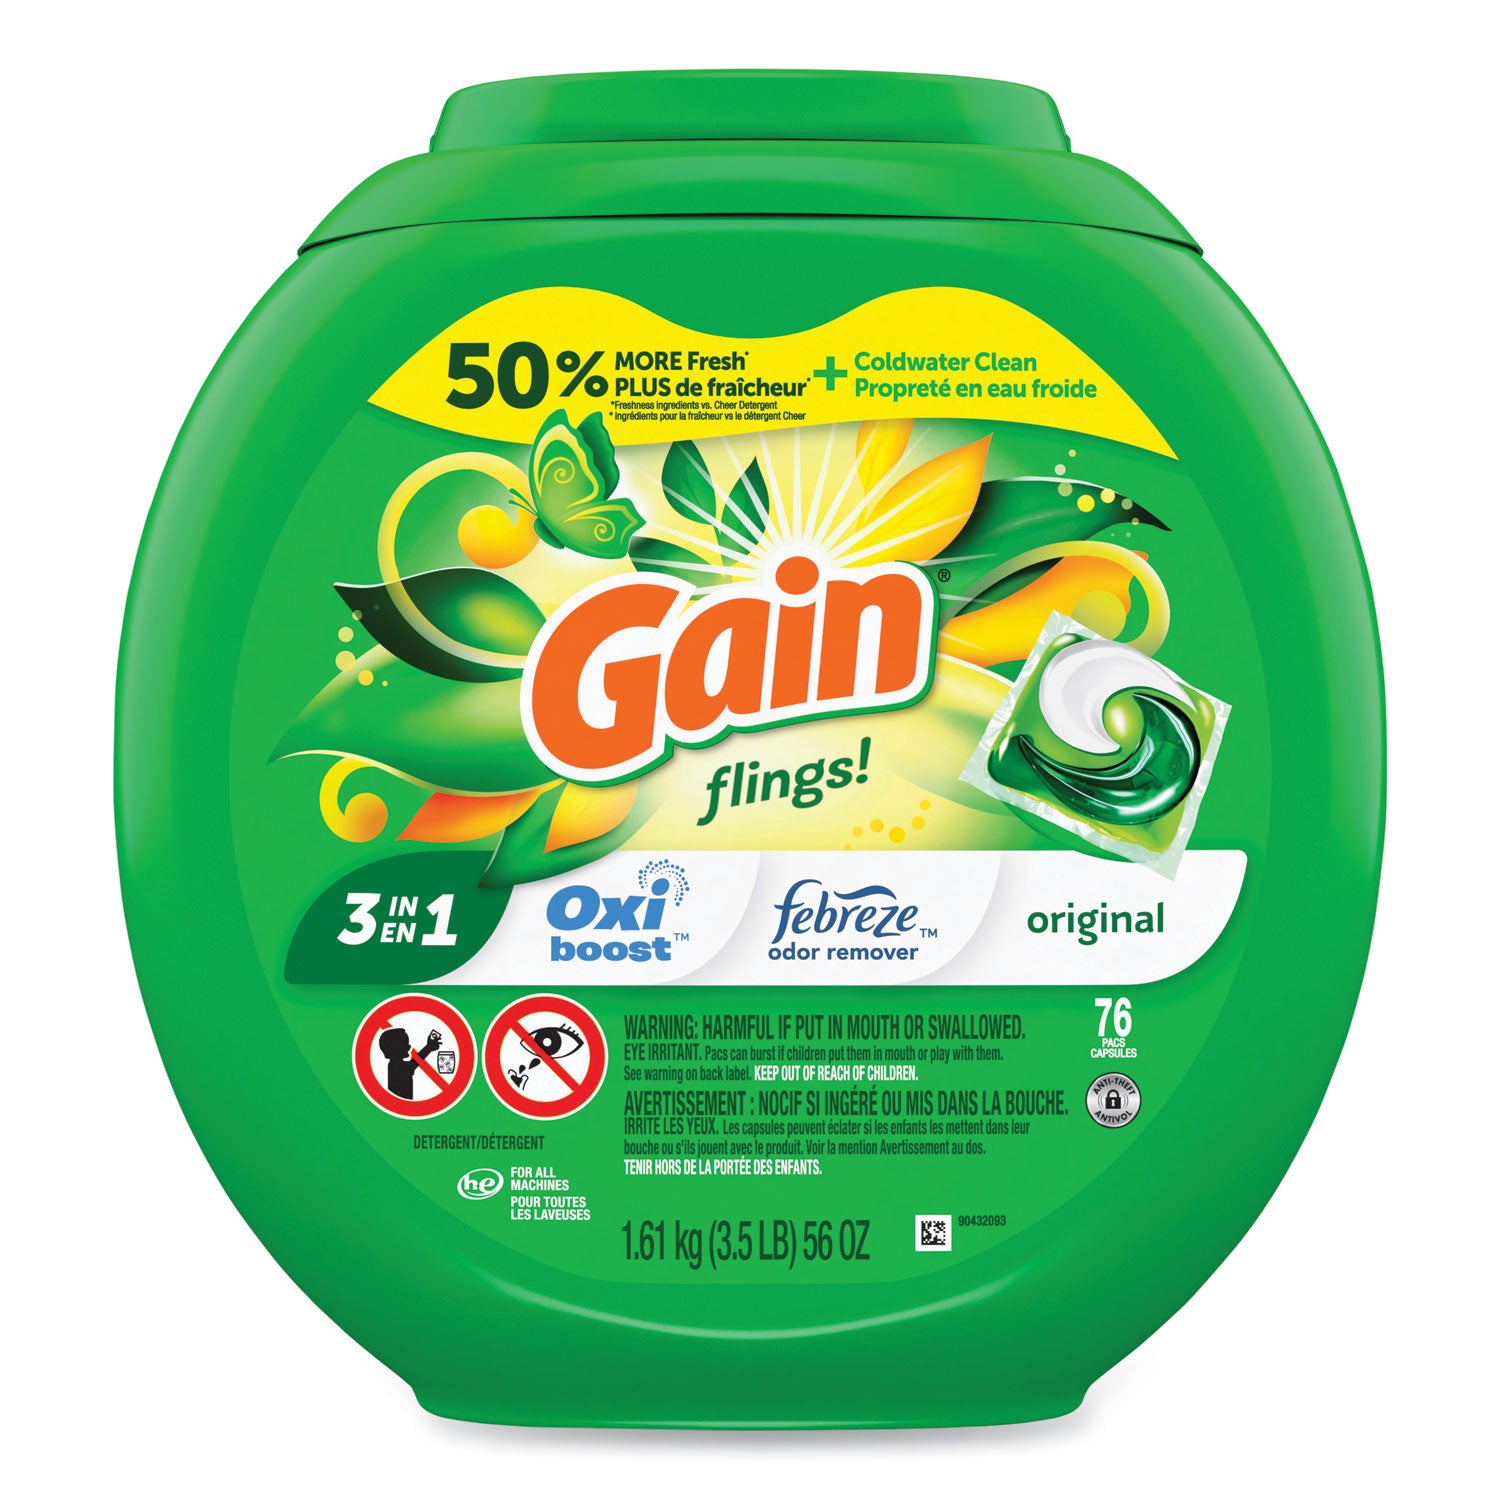 flings-detergent-pods-original-76-pods-tub_pgc09207pk - 1